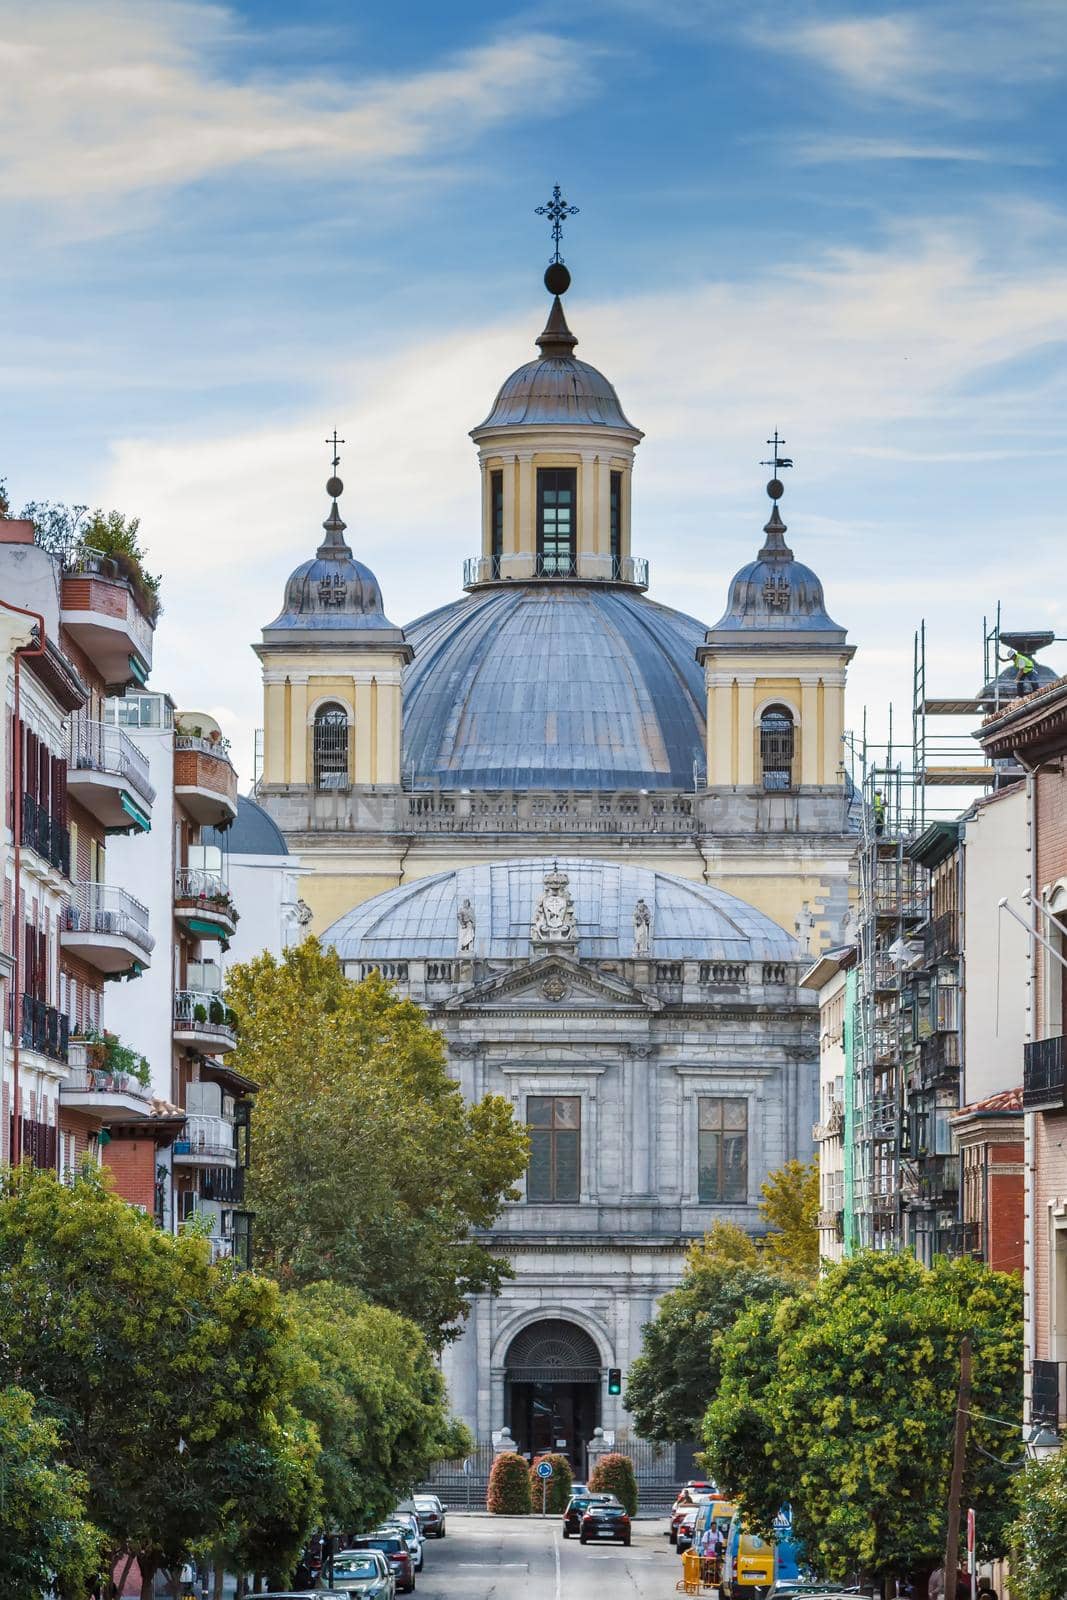 Royal Basilica of San Francisco el Grande is a Roman Catholic church in central Madrid, Spain